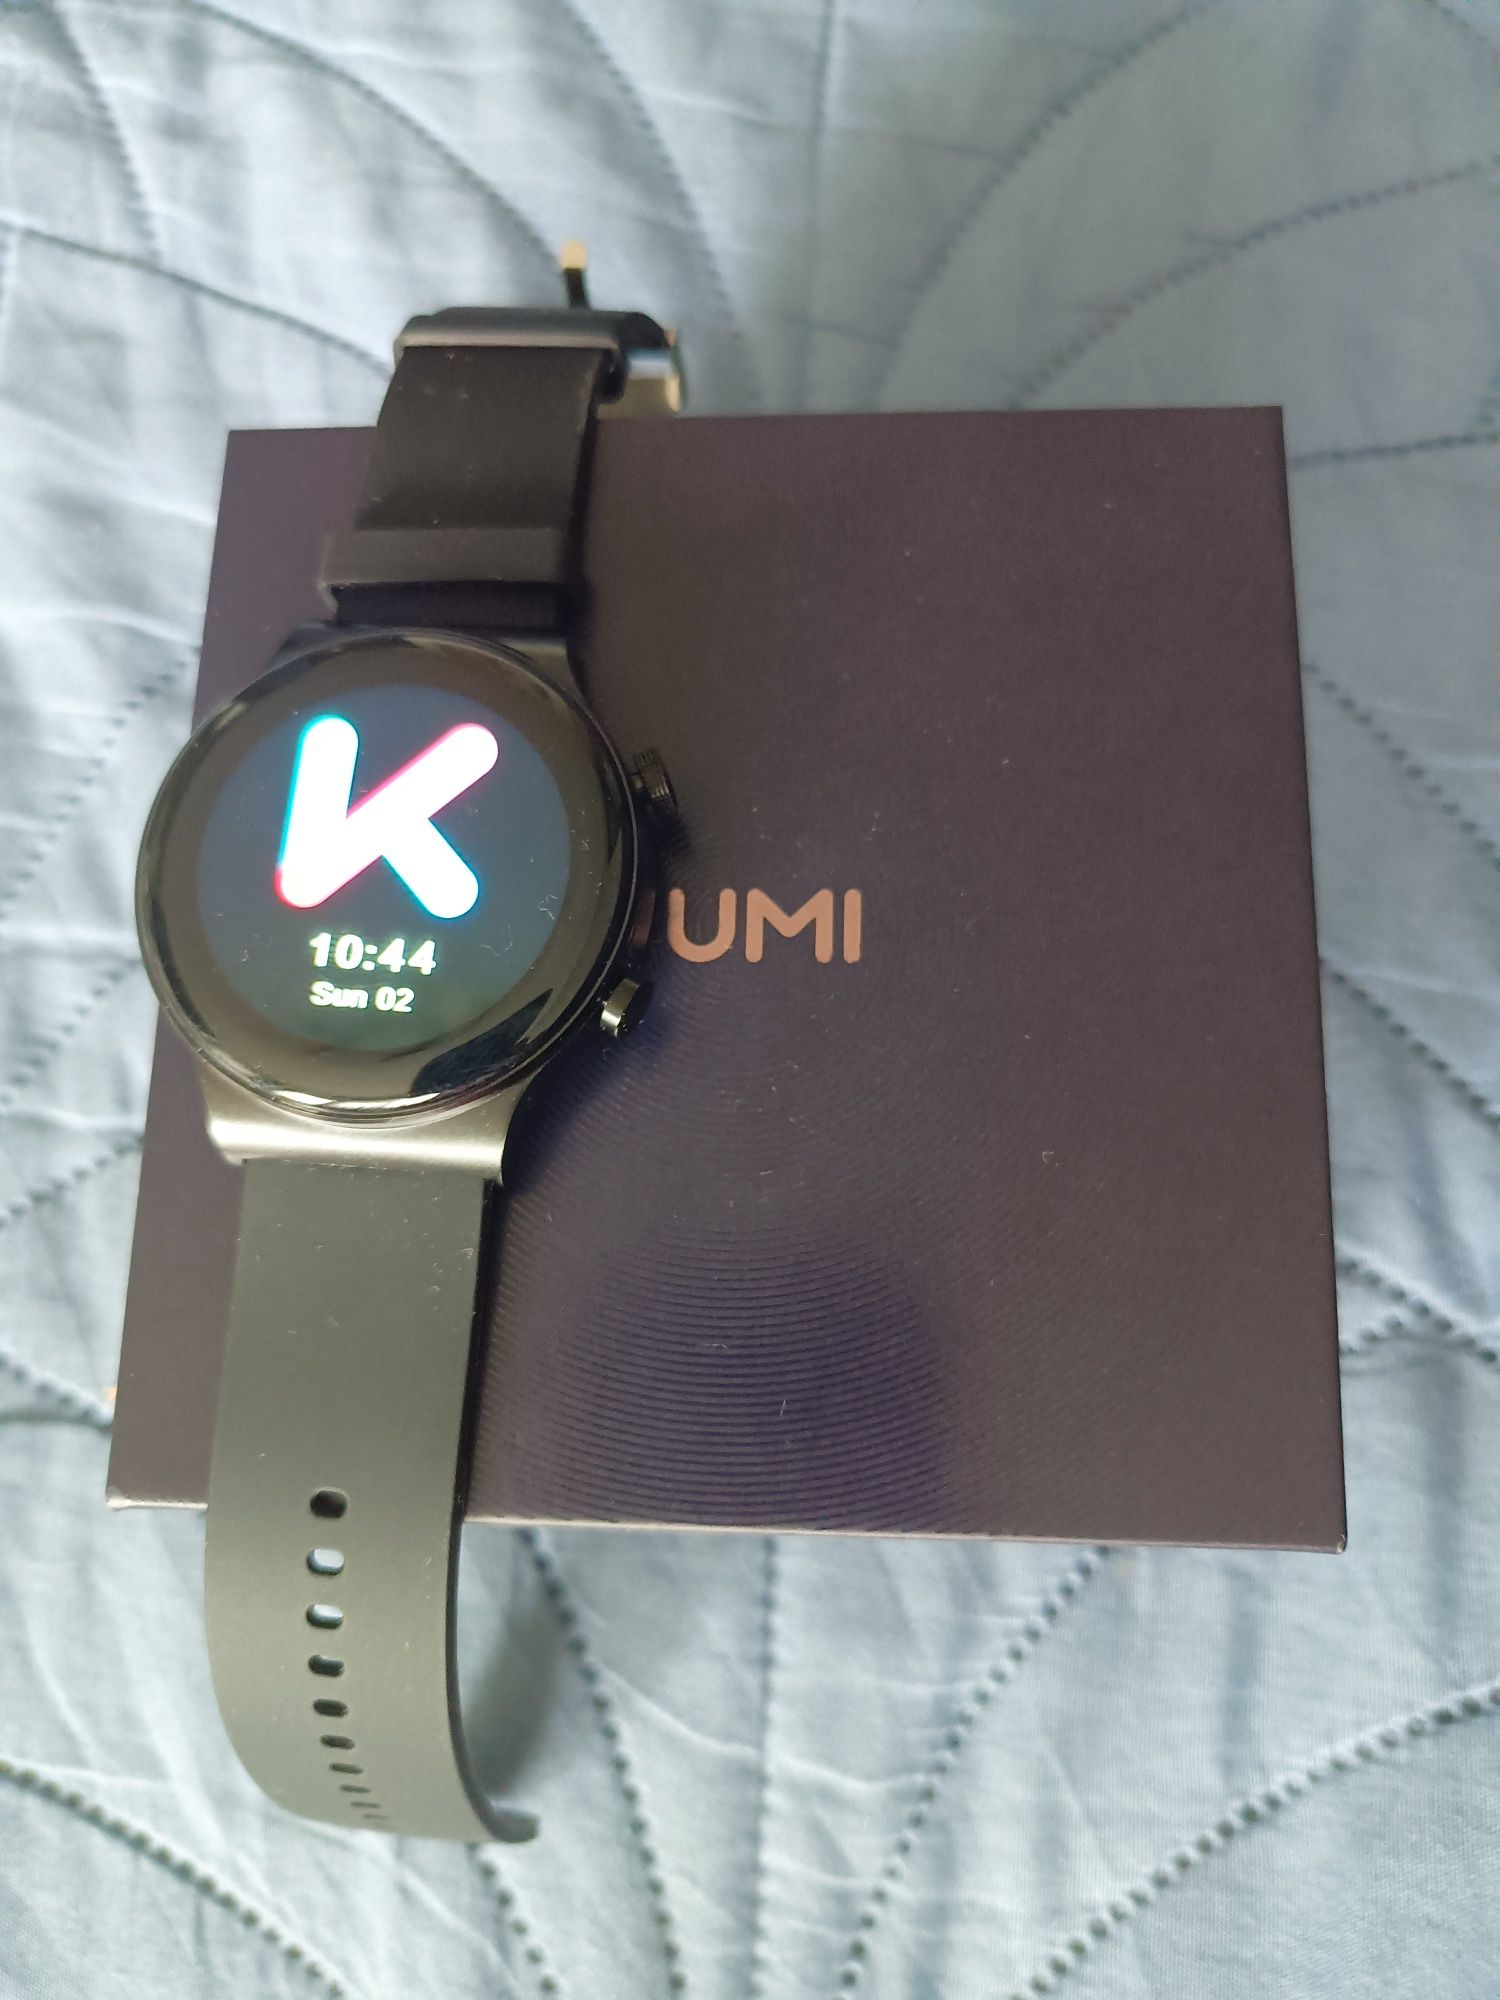 Smartwatch Kumi GT5 Pro